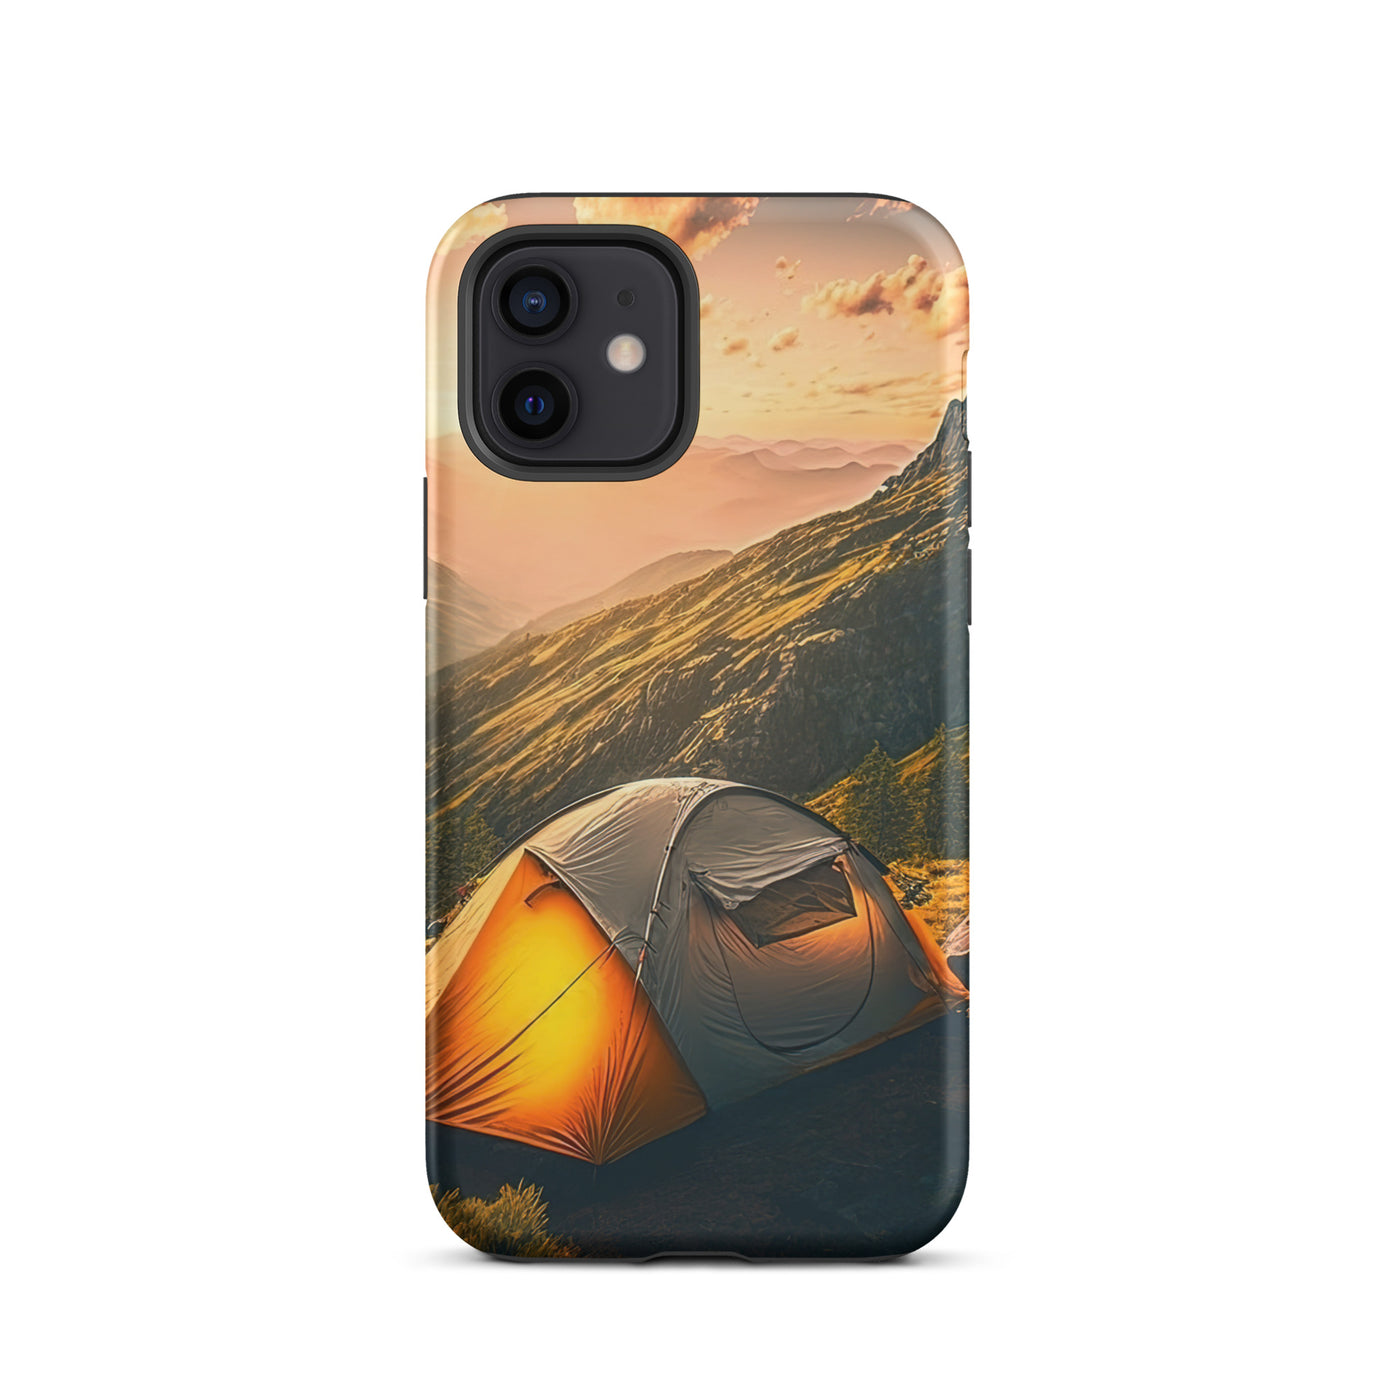 Zelt auf Berg im Sonnenaufgang - Landschafts - iPhone Schutzhülle (robust) camping xxx iPhone 12